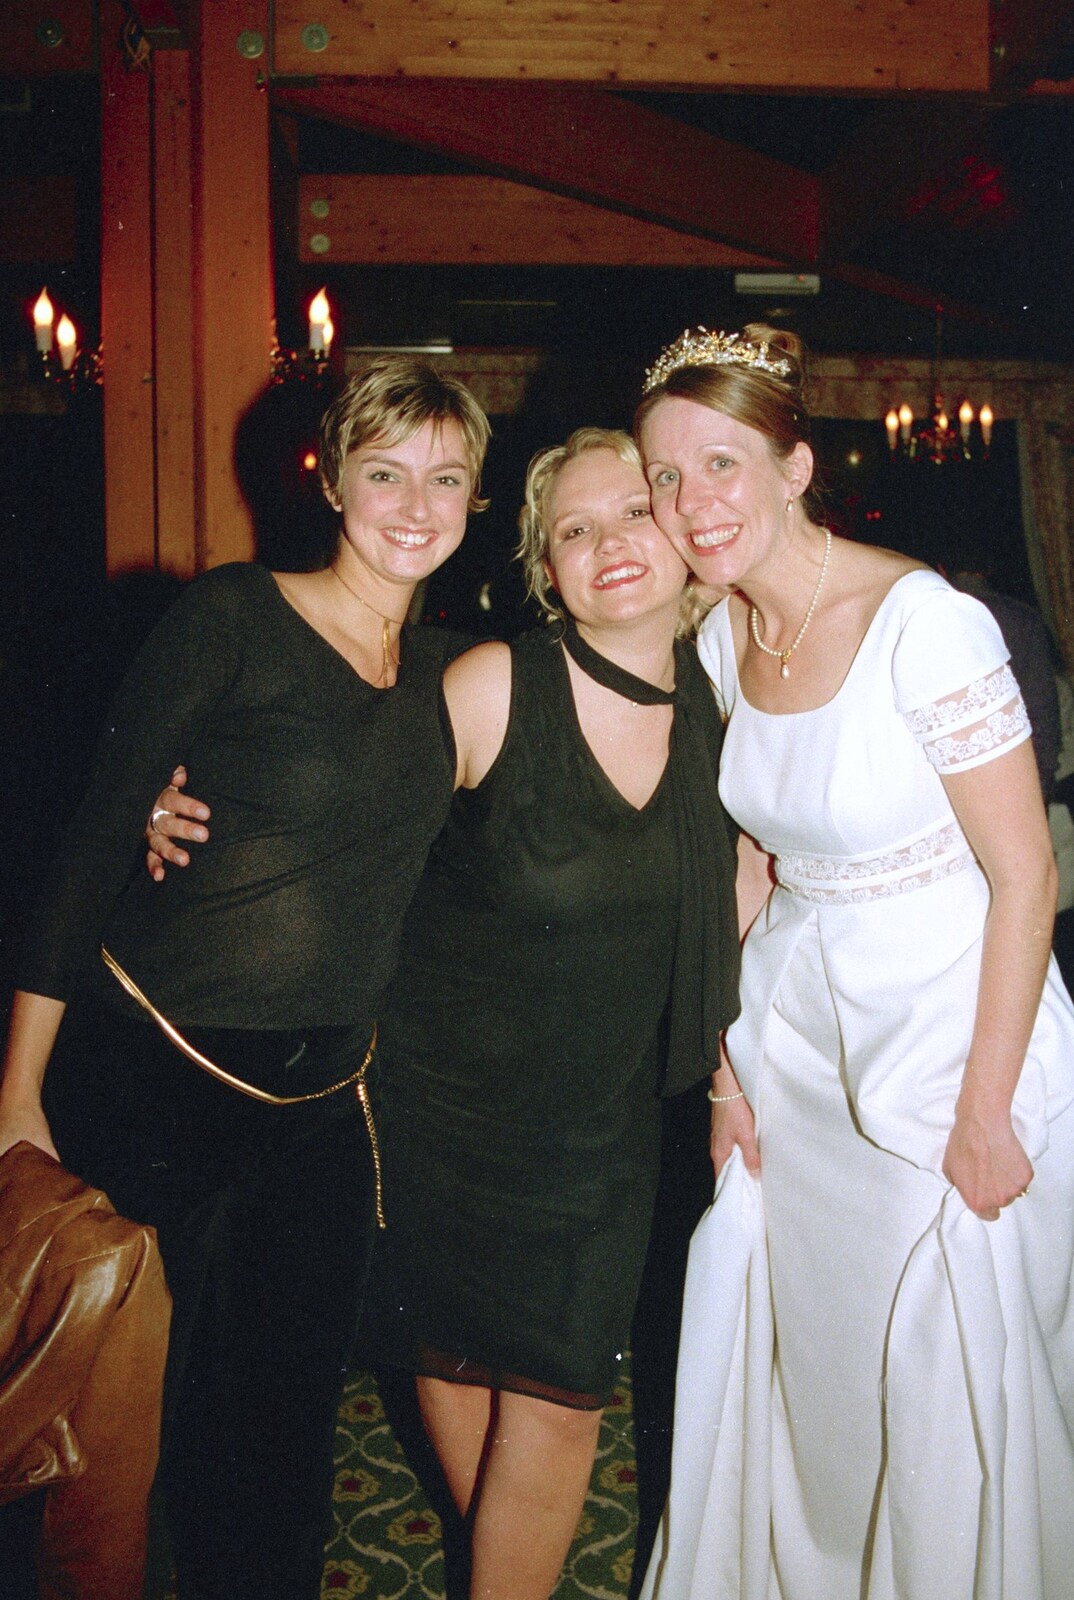 Wendy, Michelle and Paula from Paula's 3G Lab Wedding Reception, Huntingdon, Cambridgeshire - 4th September 2000